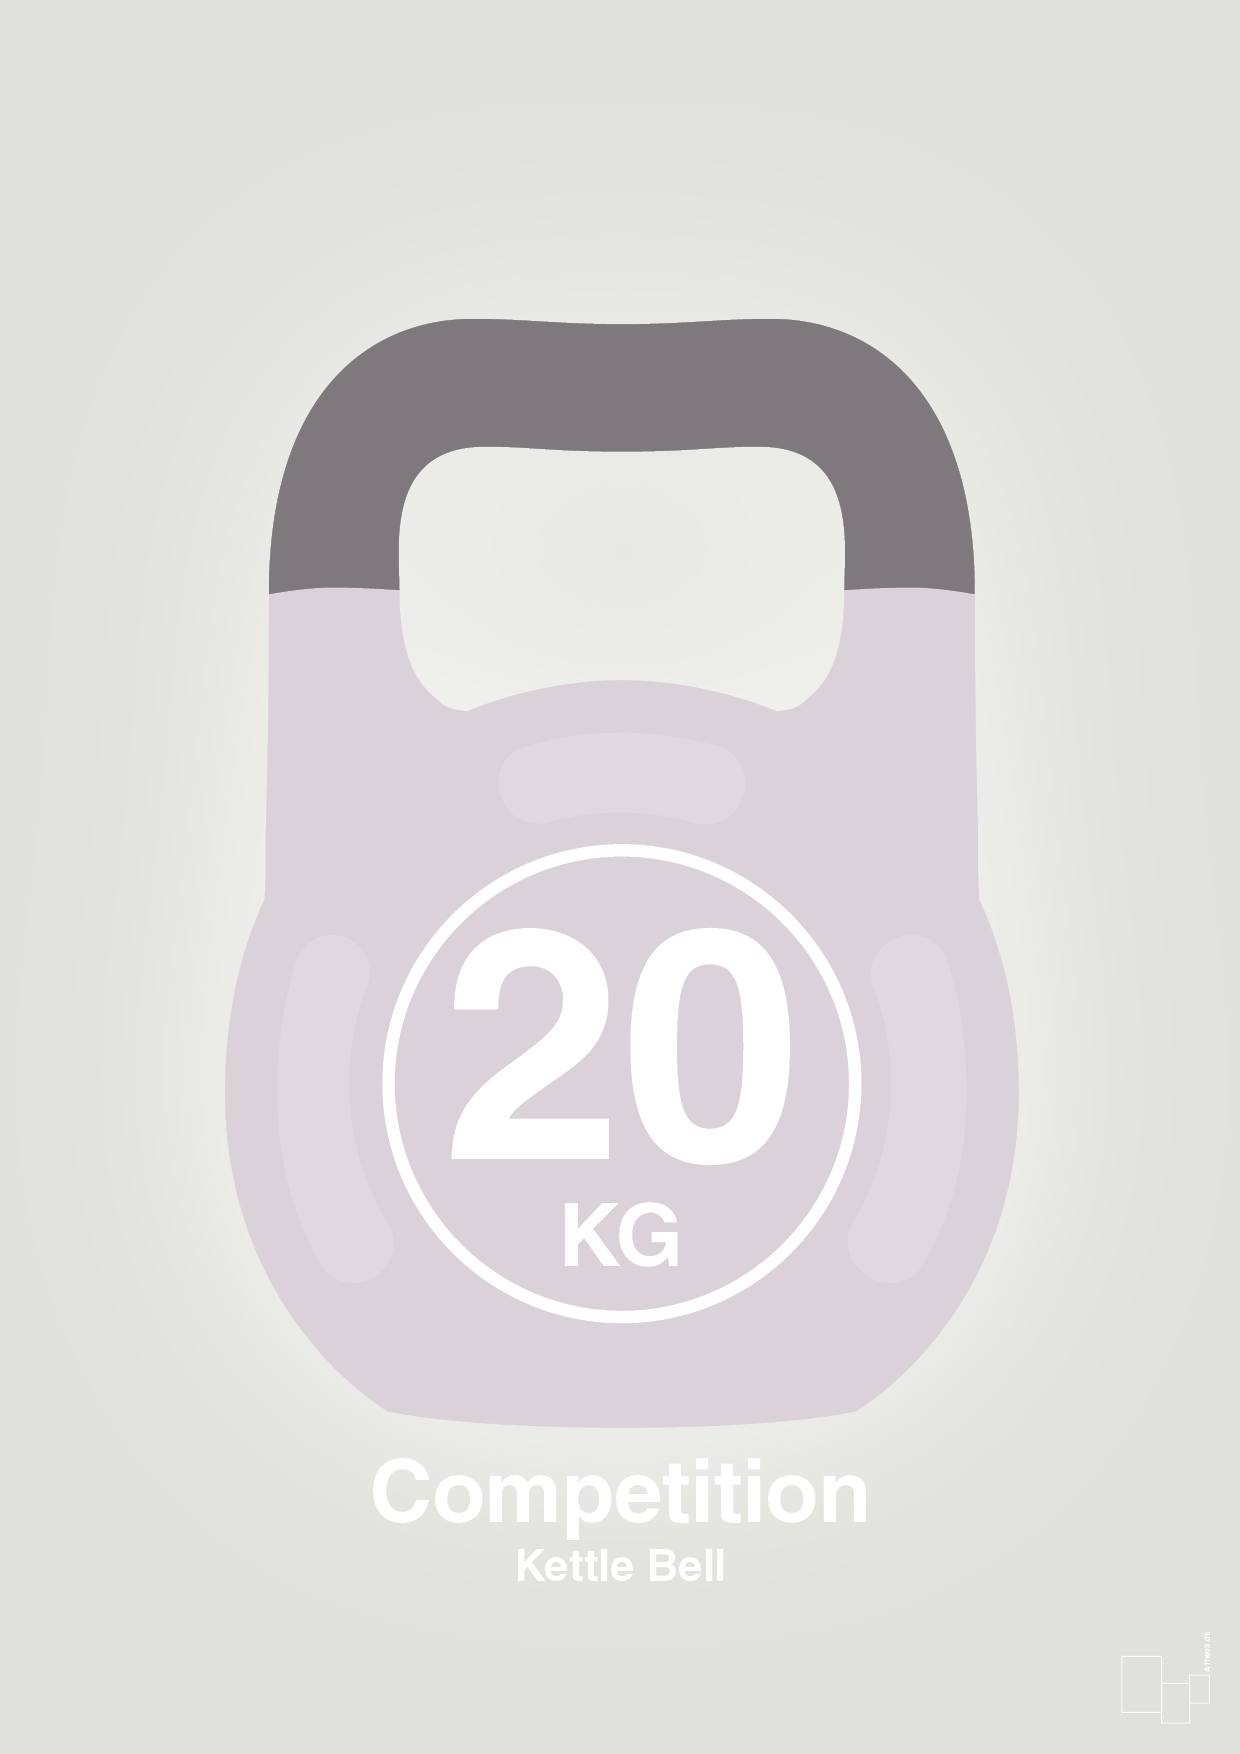 kettle bell 20 kg - competition color - Plakat med Grafik i Painters White